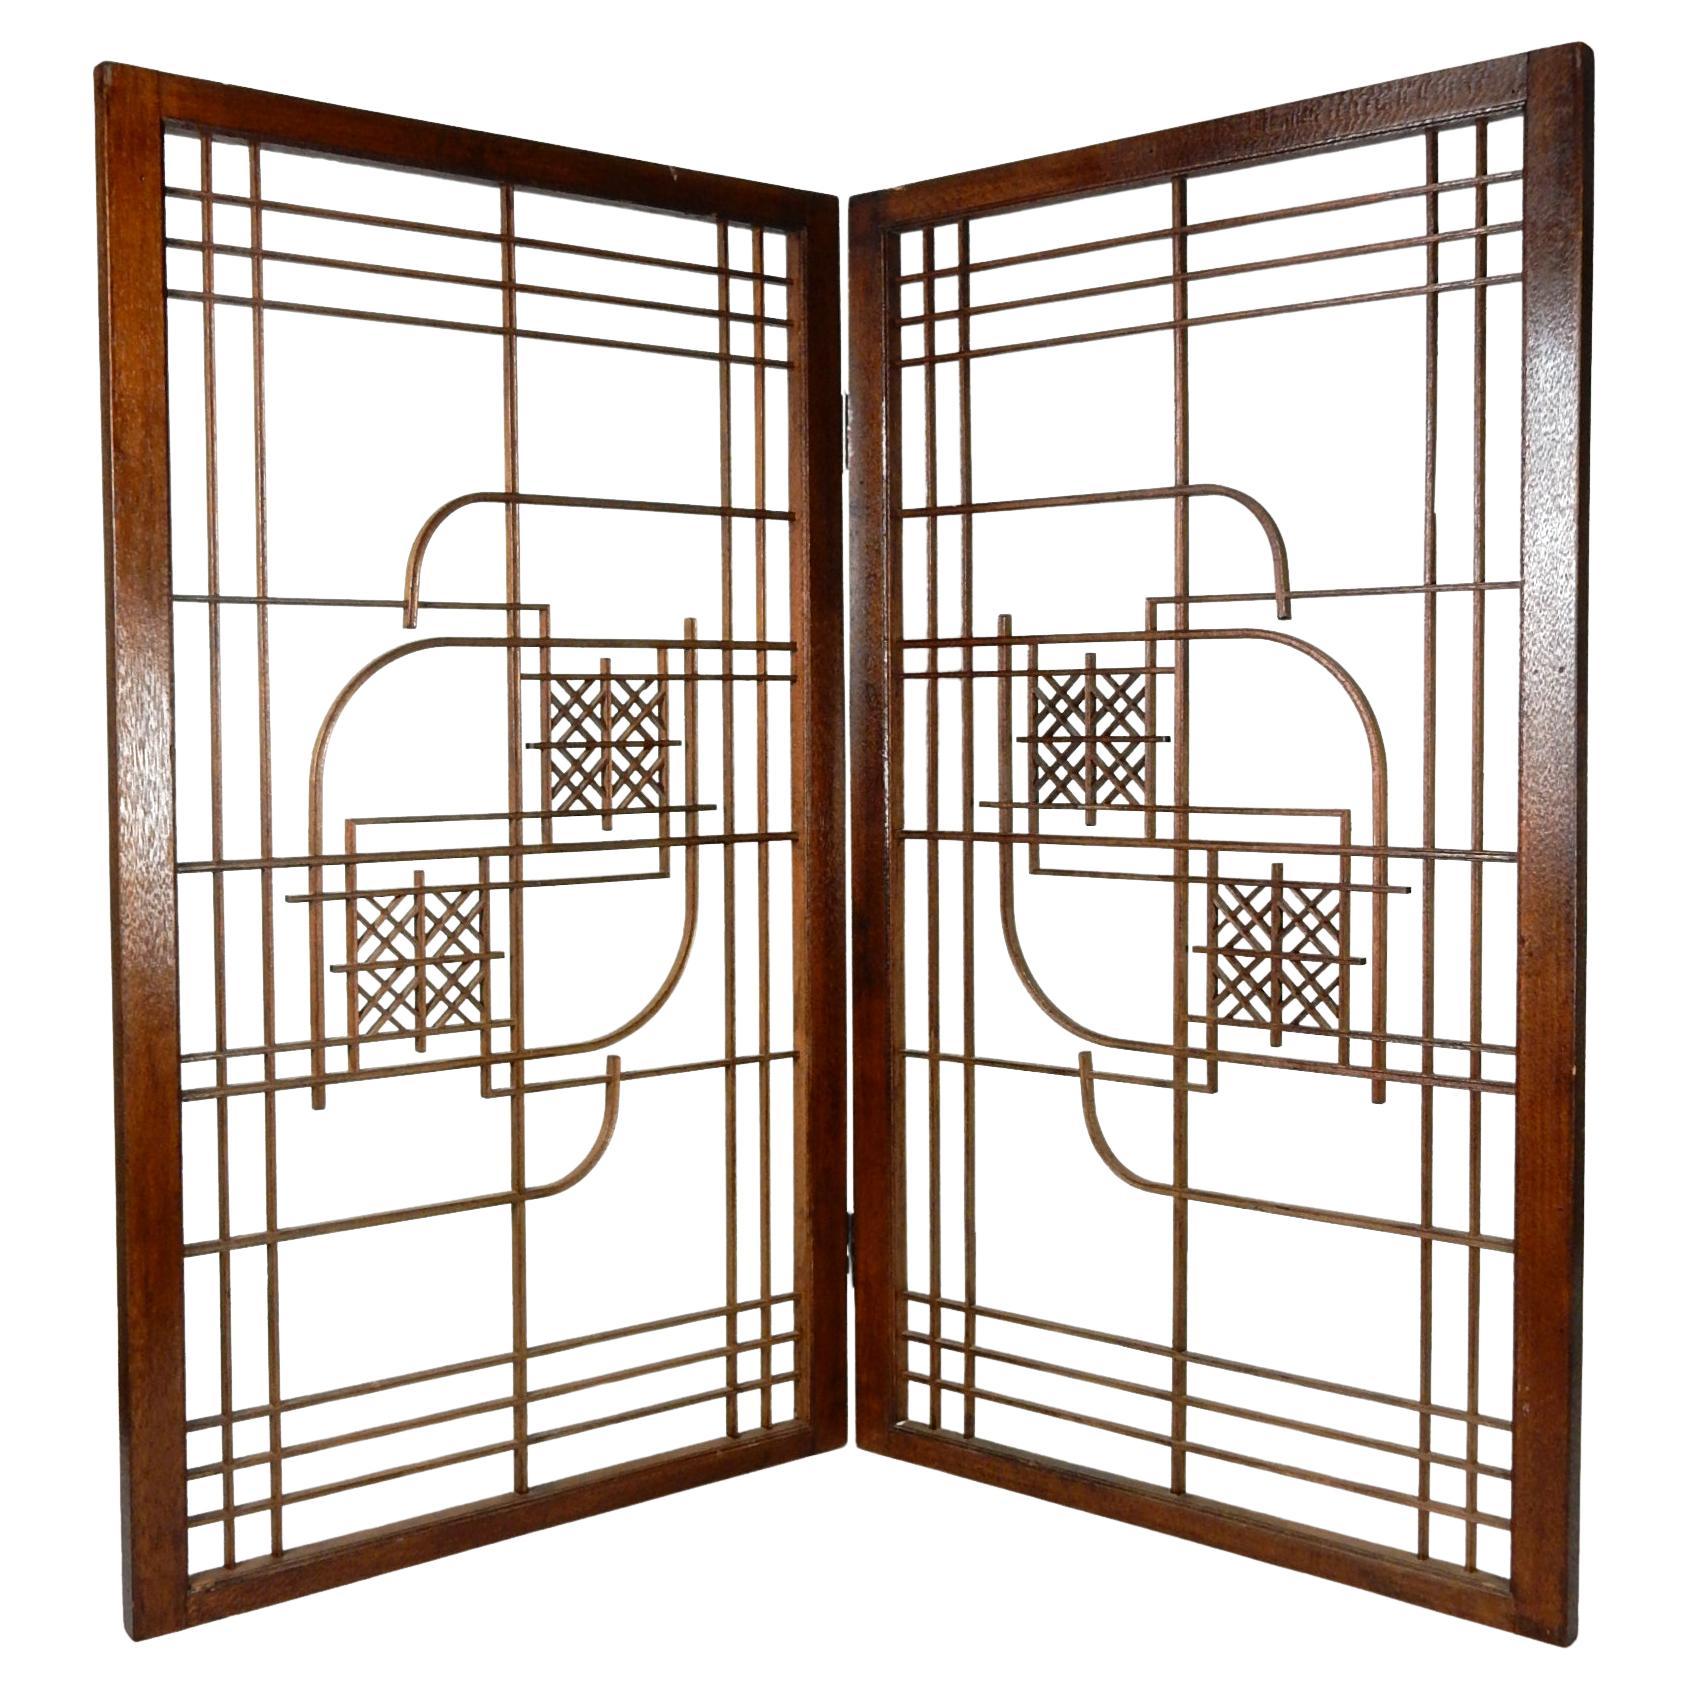 Arts & Crafts Era Geometric Wood Inlay Window Panel Screen Frank Lloyd Wright